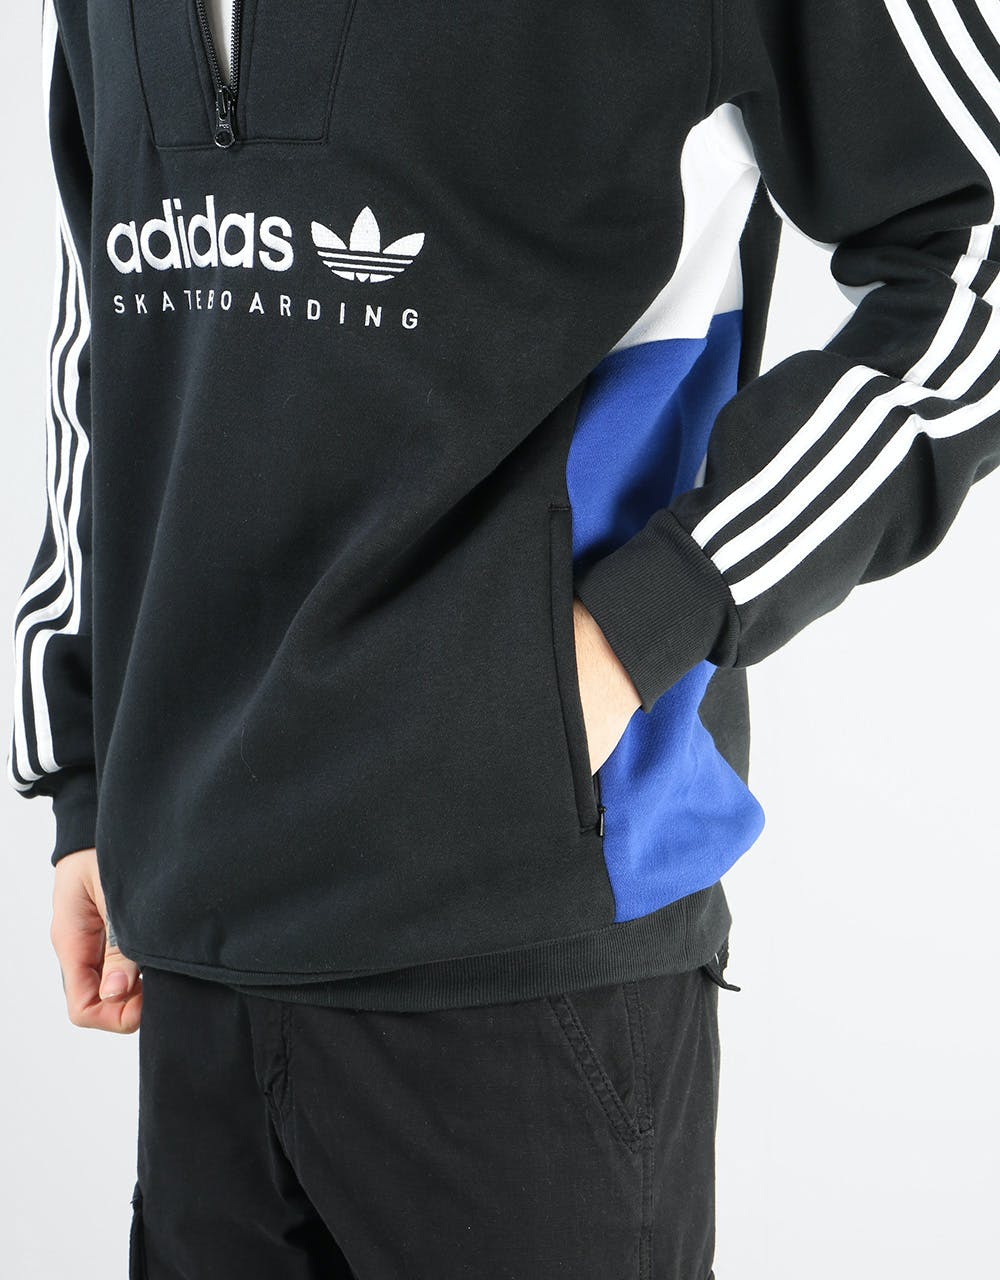 Adidas Apian Half-Zip Sweatshirt - Black/White/Active Blue